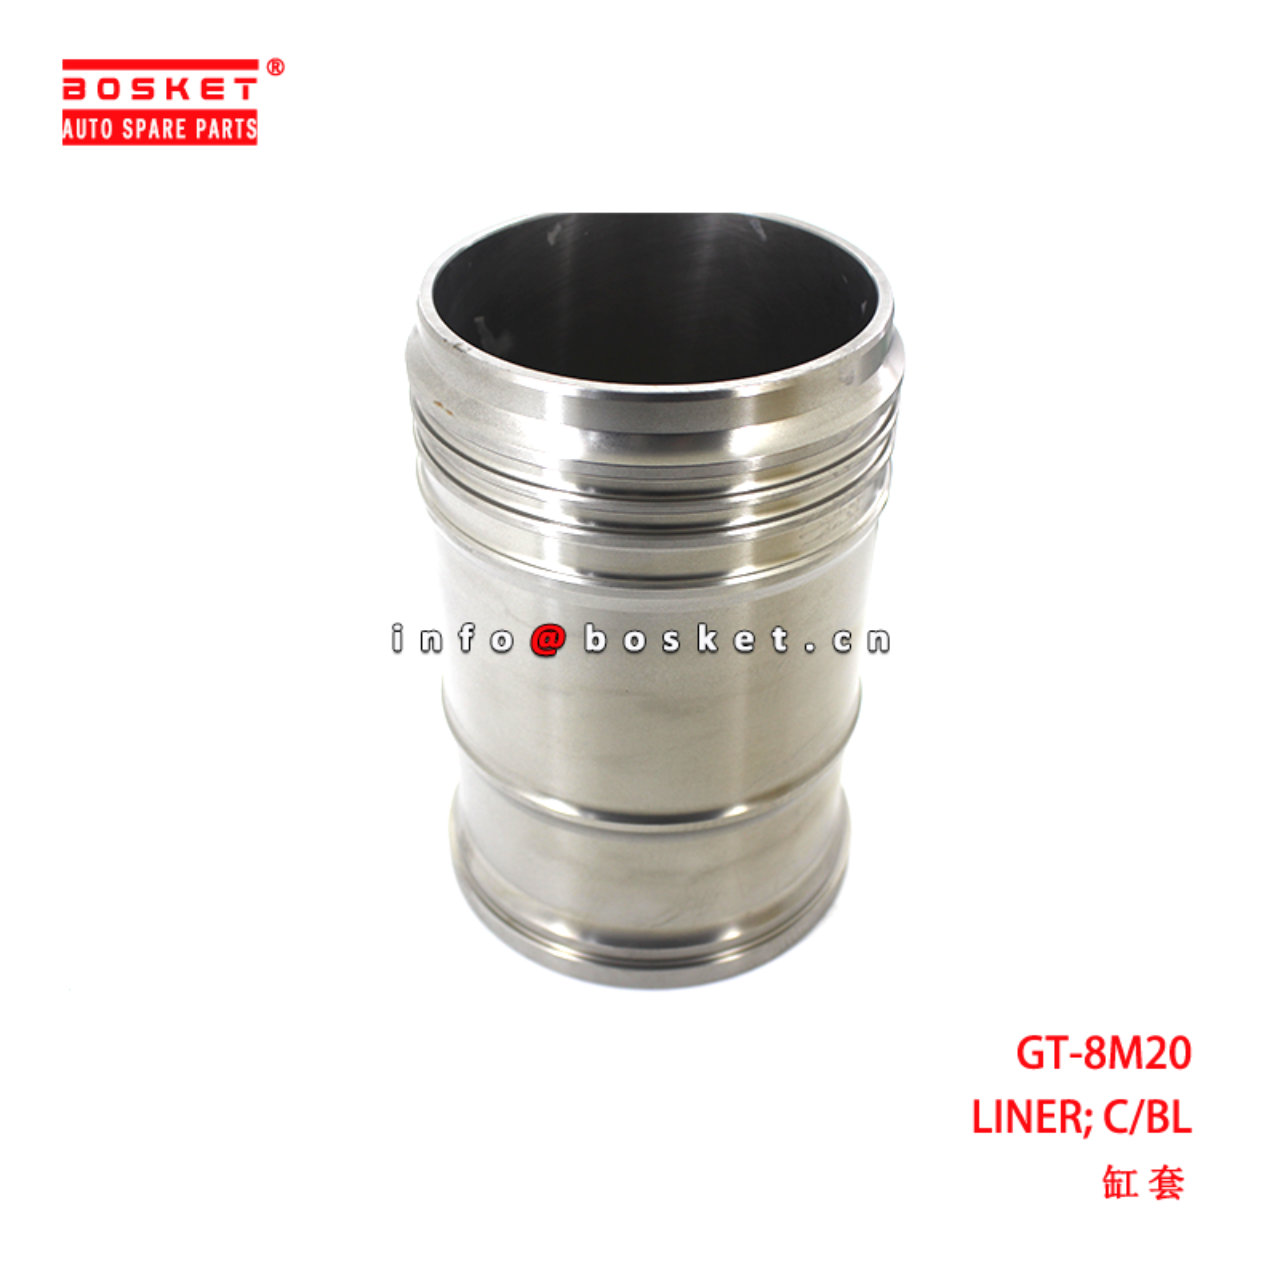 GT-8M20 Cylinder Block Liner suitable for ISUZU  8M20 GT-8M20